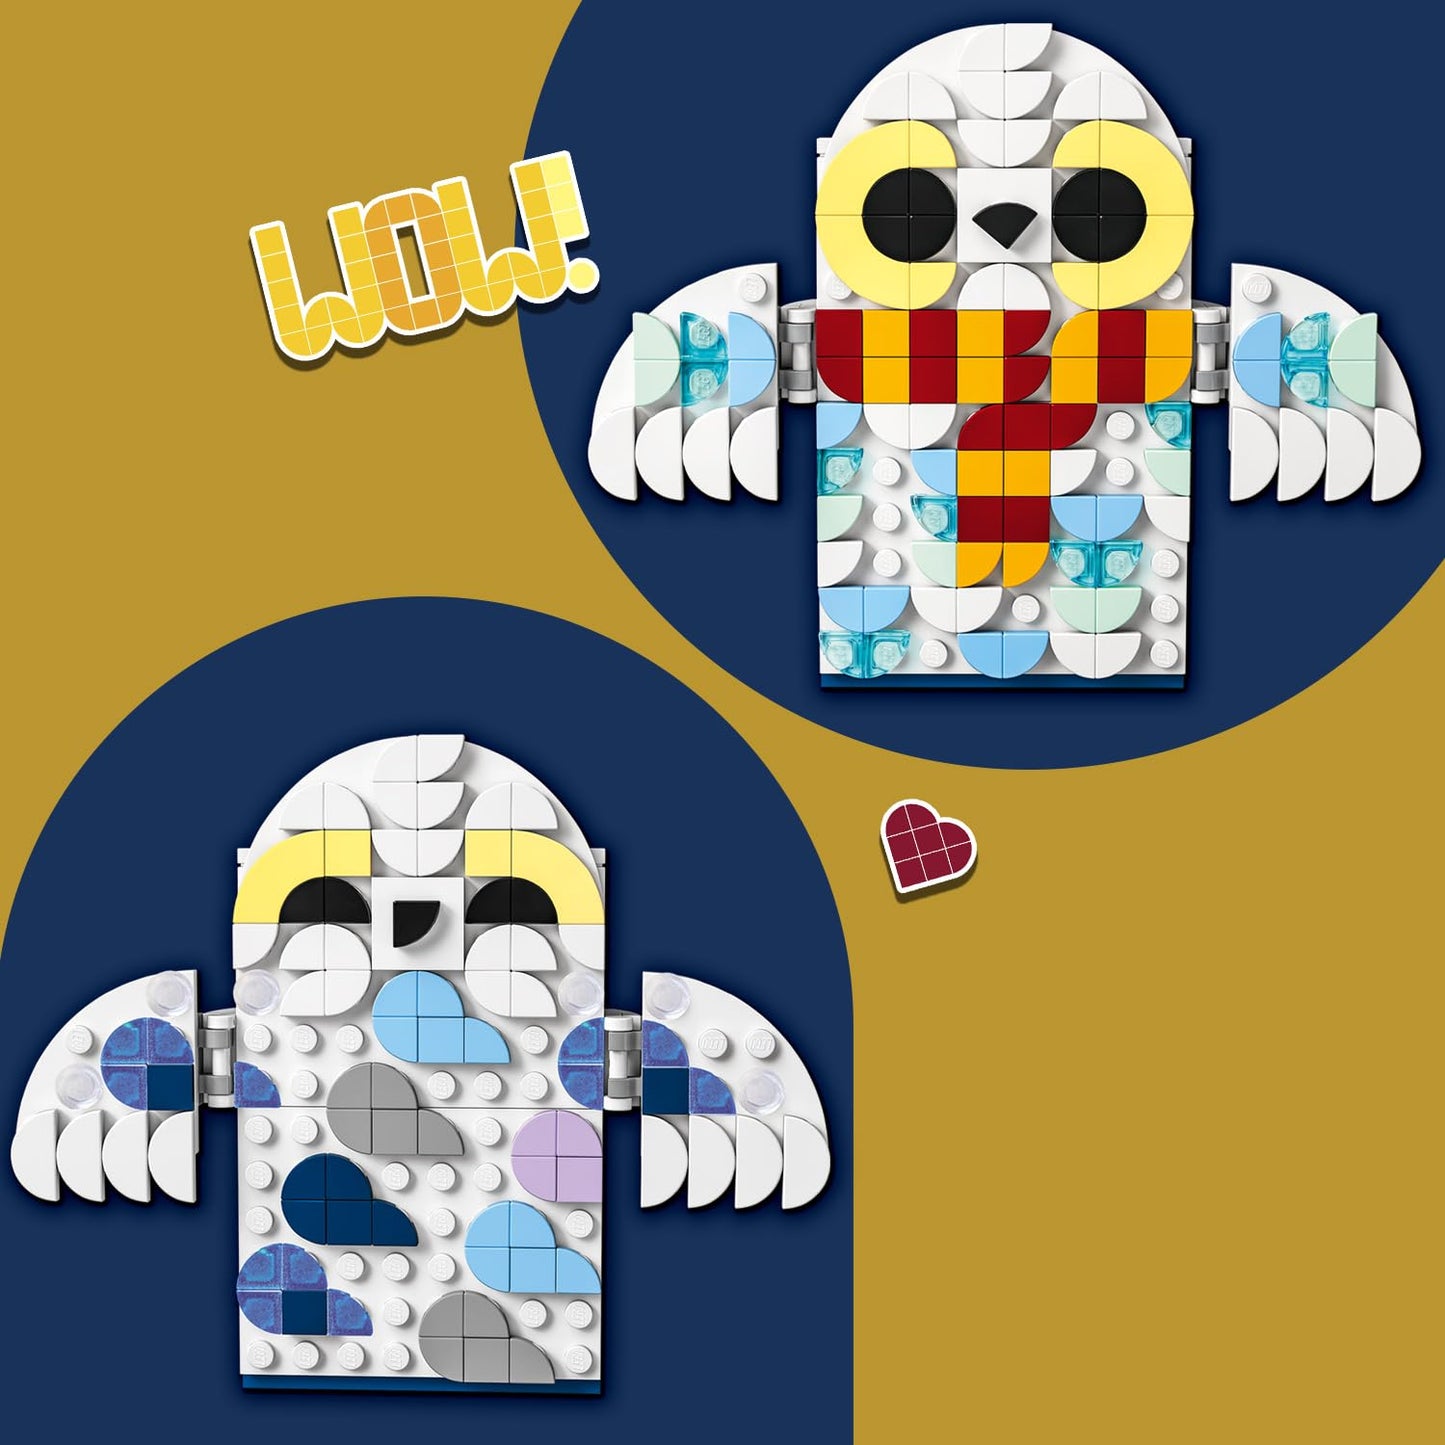 LEGO DOTS Hedwig Pencil Holder 41809 DIY Craft Kit (518 Pieces) - 6+Yrs